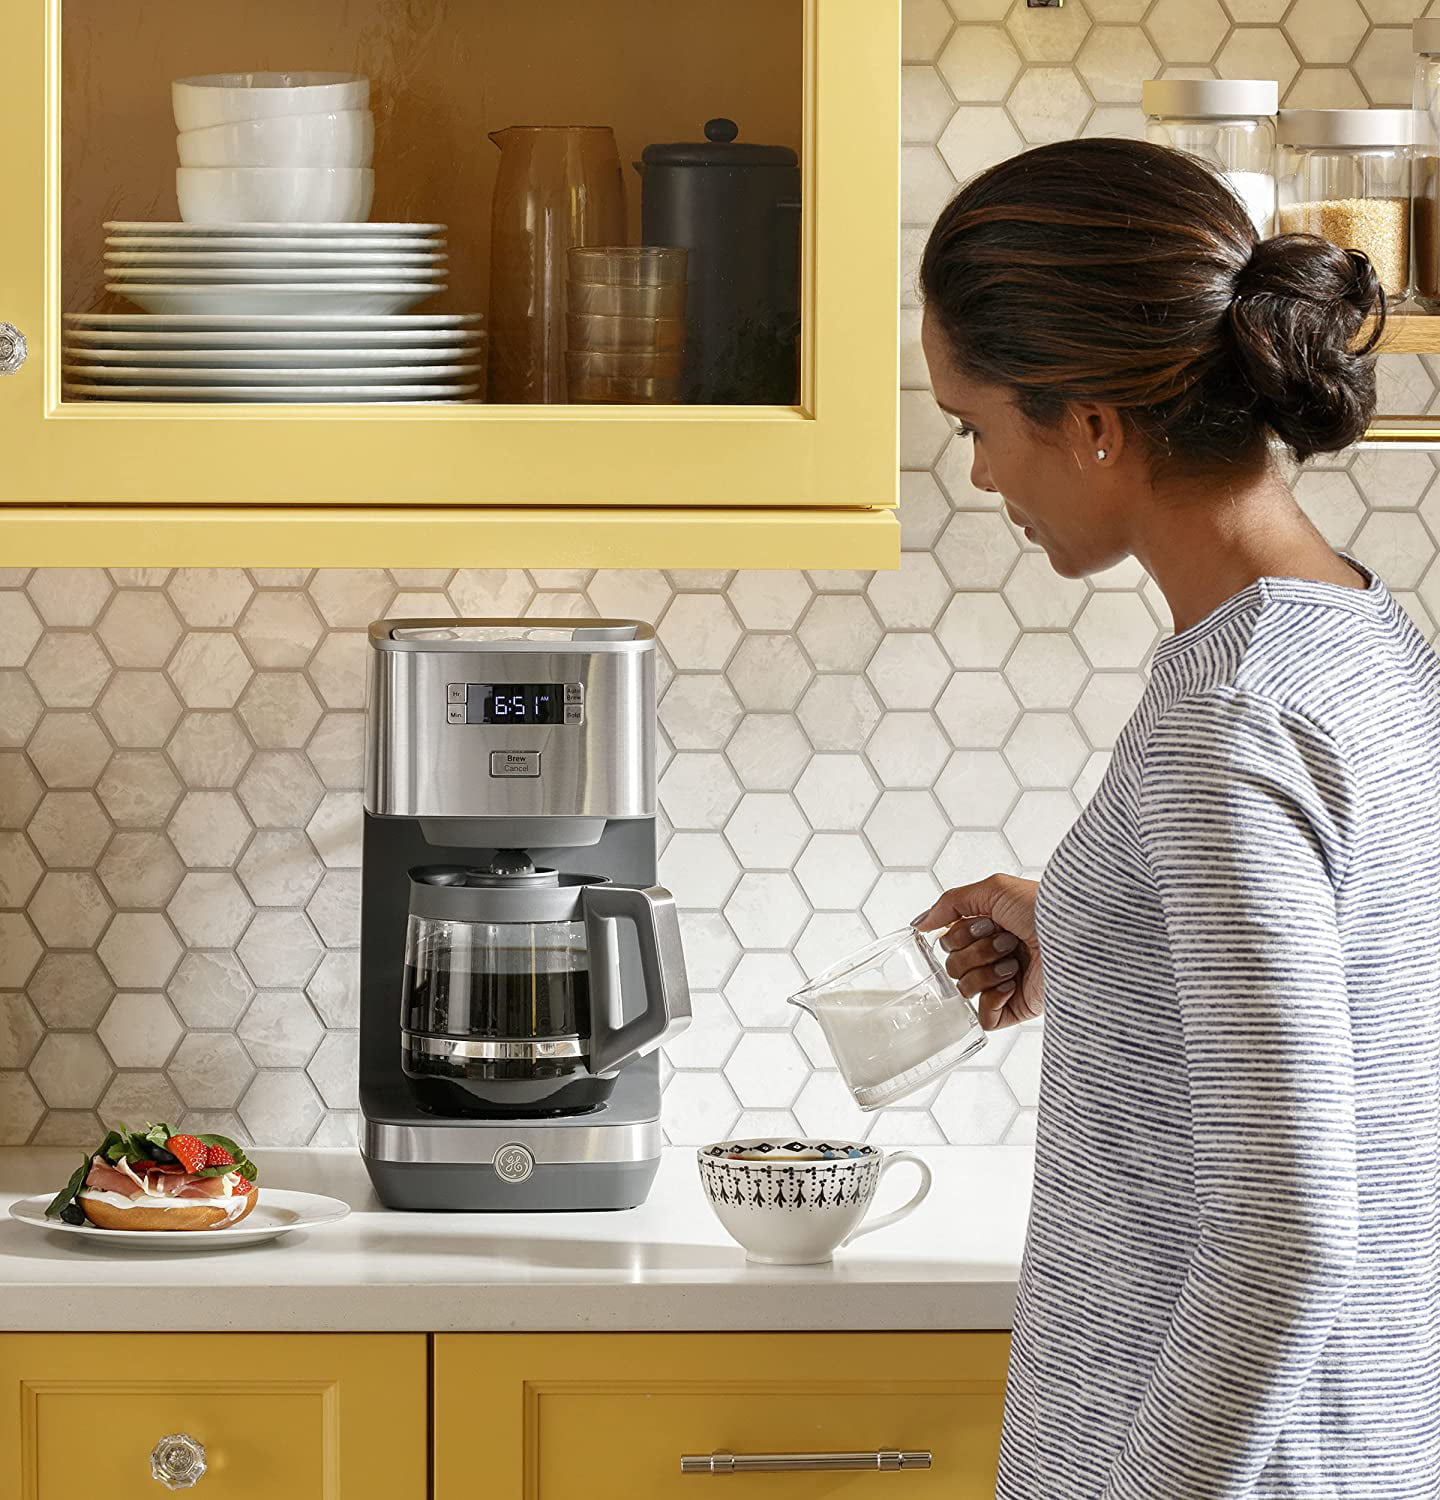 GE 12 Cup Drip Coffee Maker with Adjustable Keep Warm Plate - G7CDAASSTSS -  GE Appliances